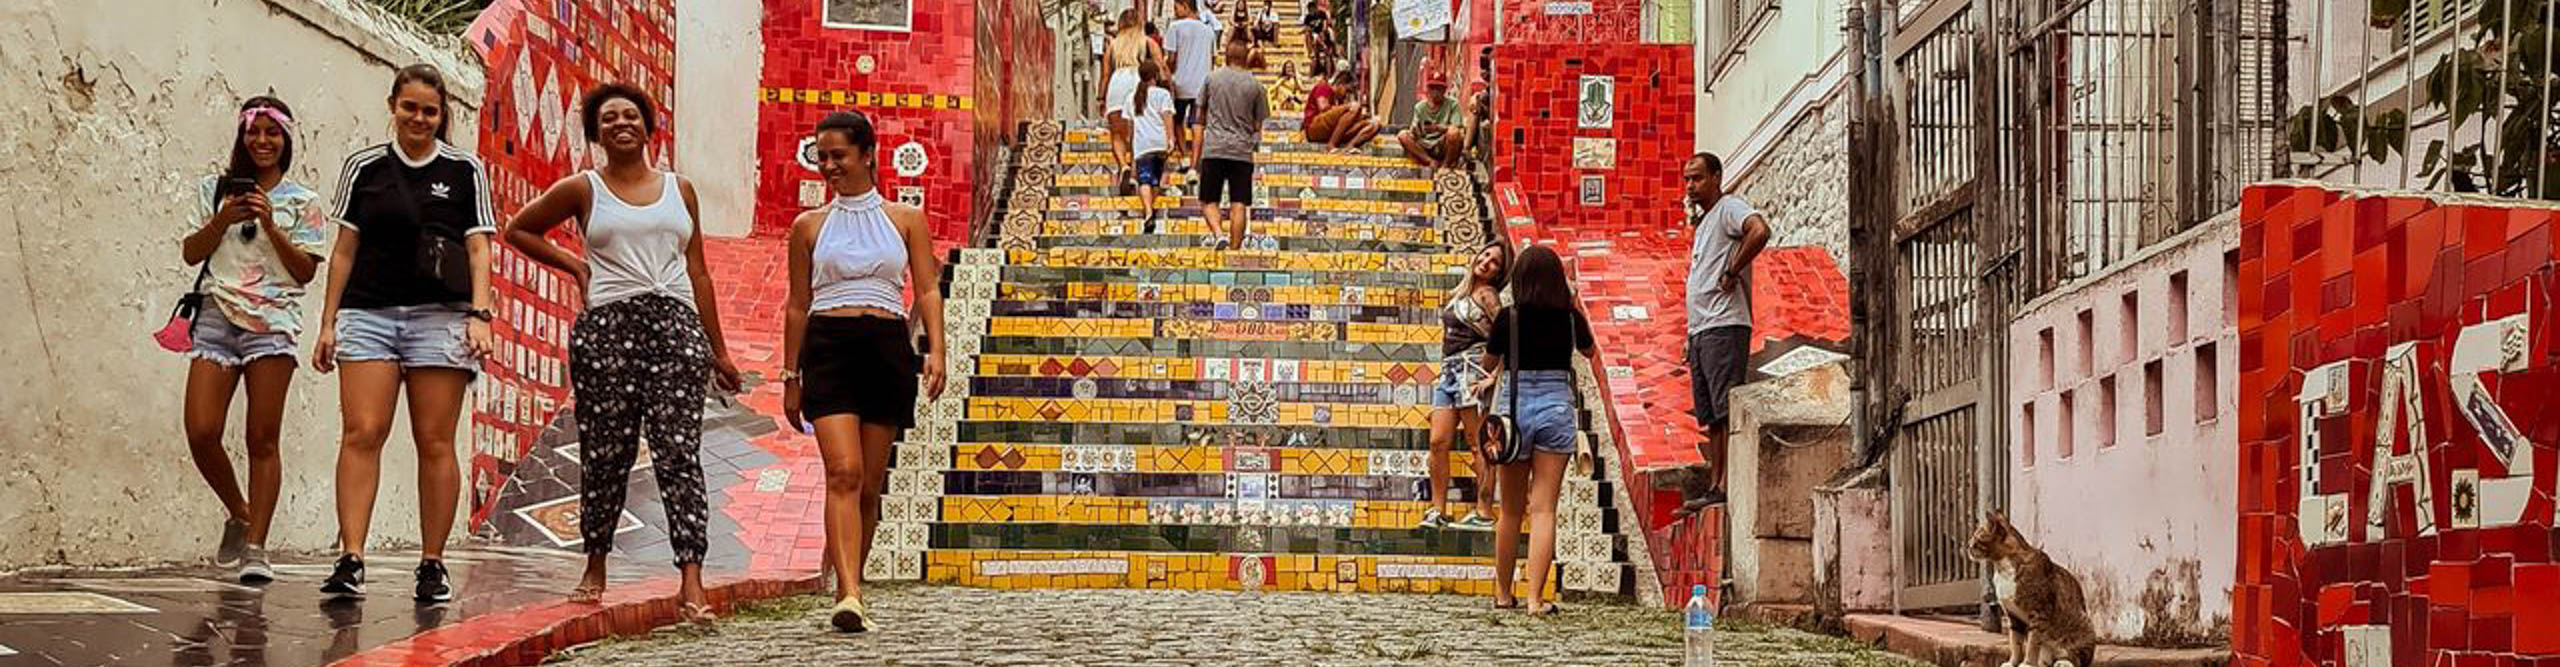 Group of travellers at Santa Teresa steps in Rio, Brazil 